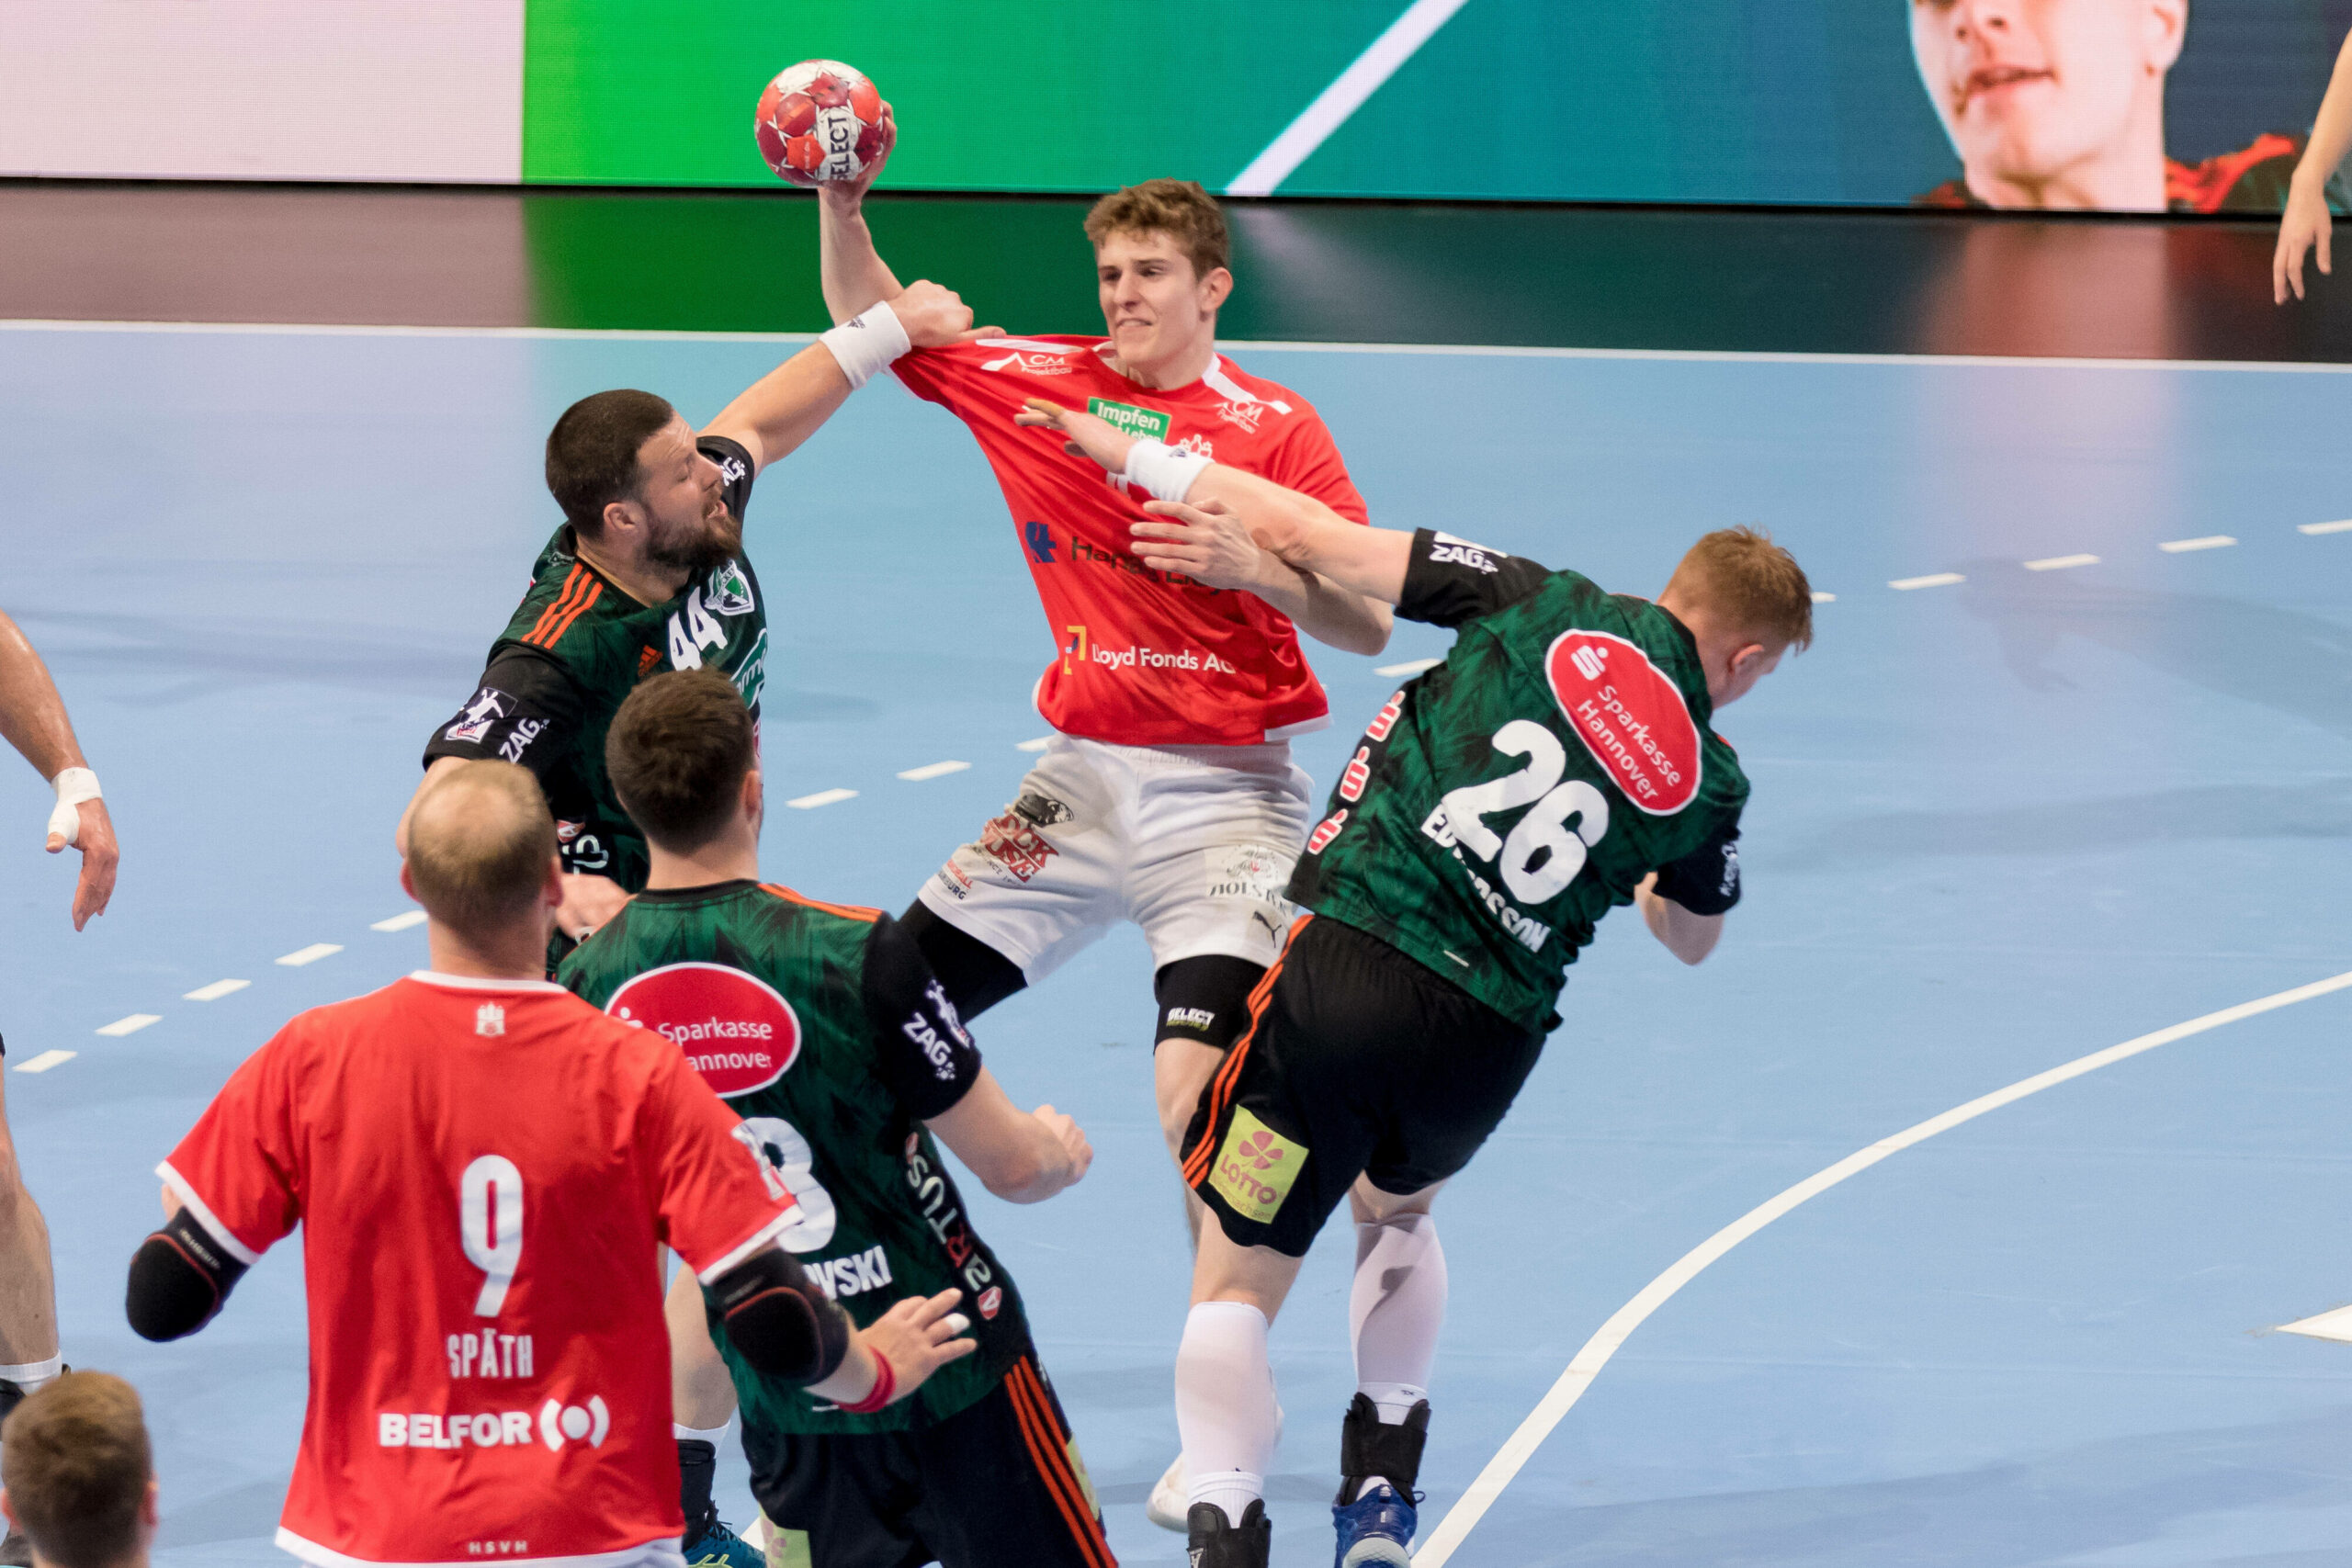 Max Niemann HSV Handball hamburg